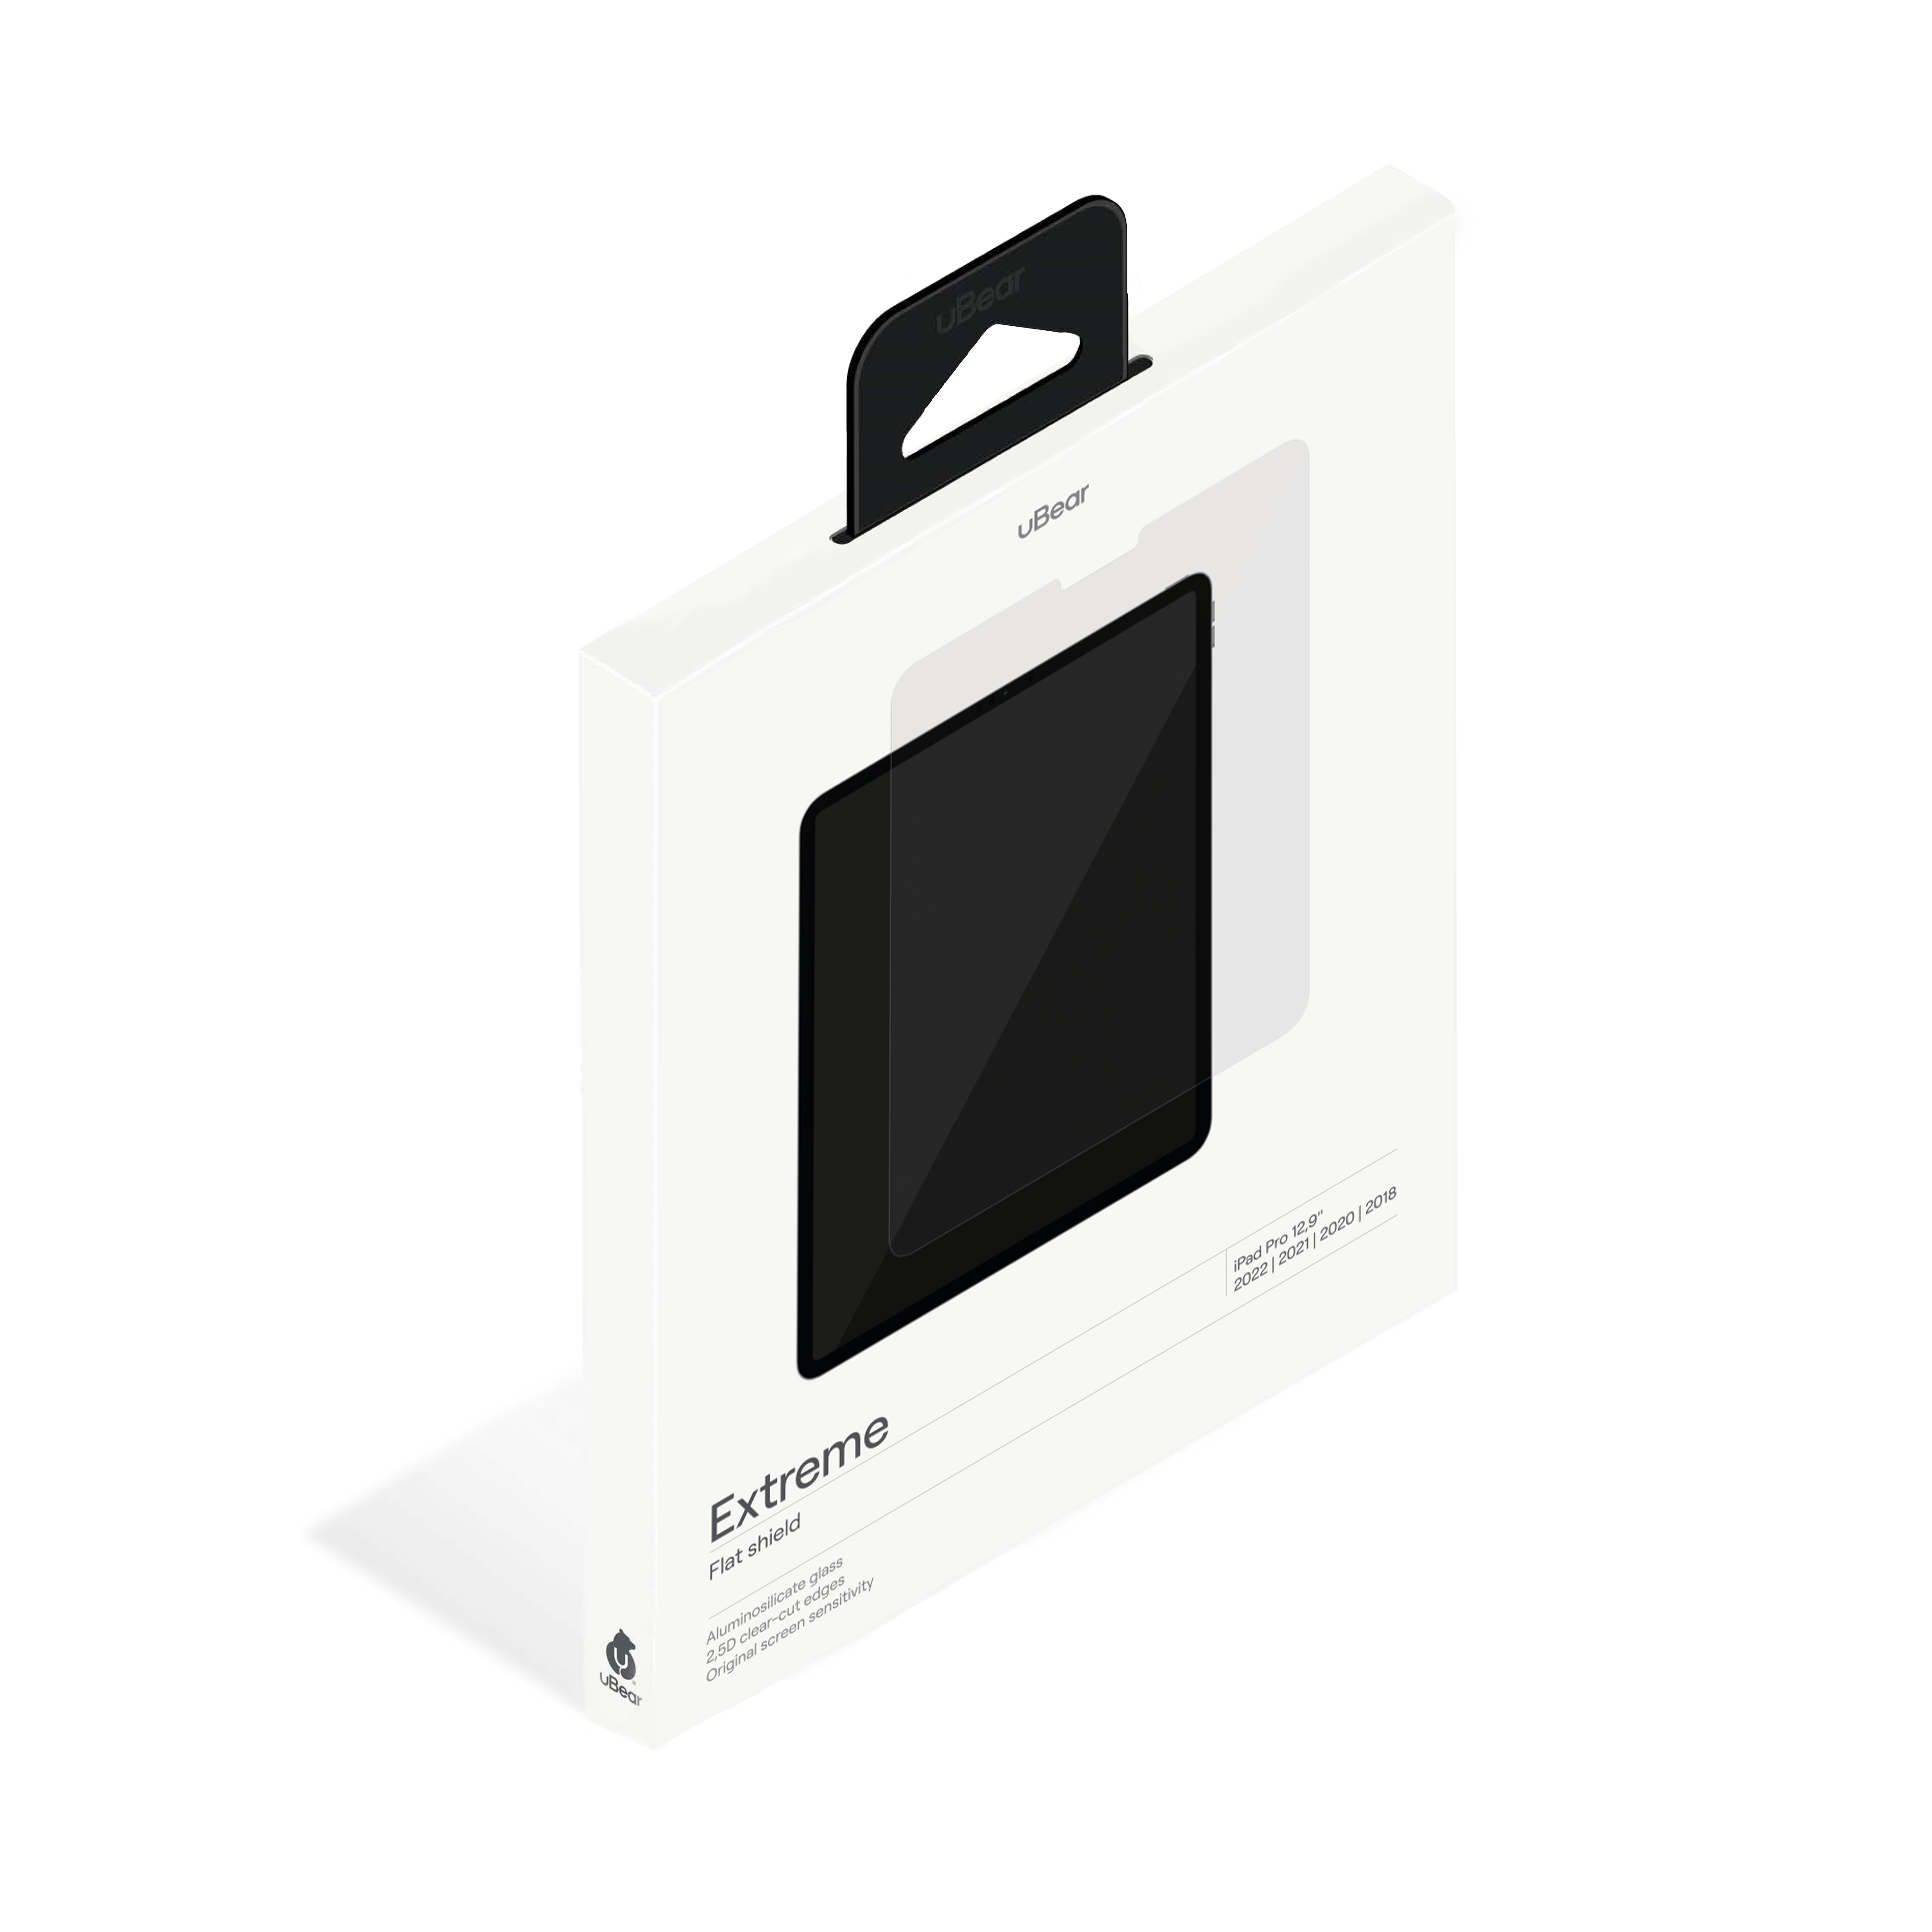 uBear Flat Shield, стекло защитное на iPad Pro 12.9'', 2.5D, 0.2mm, прозрачный